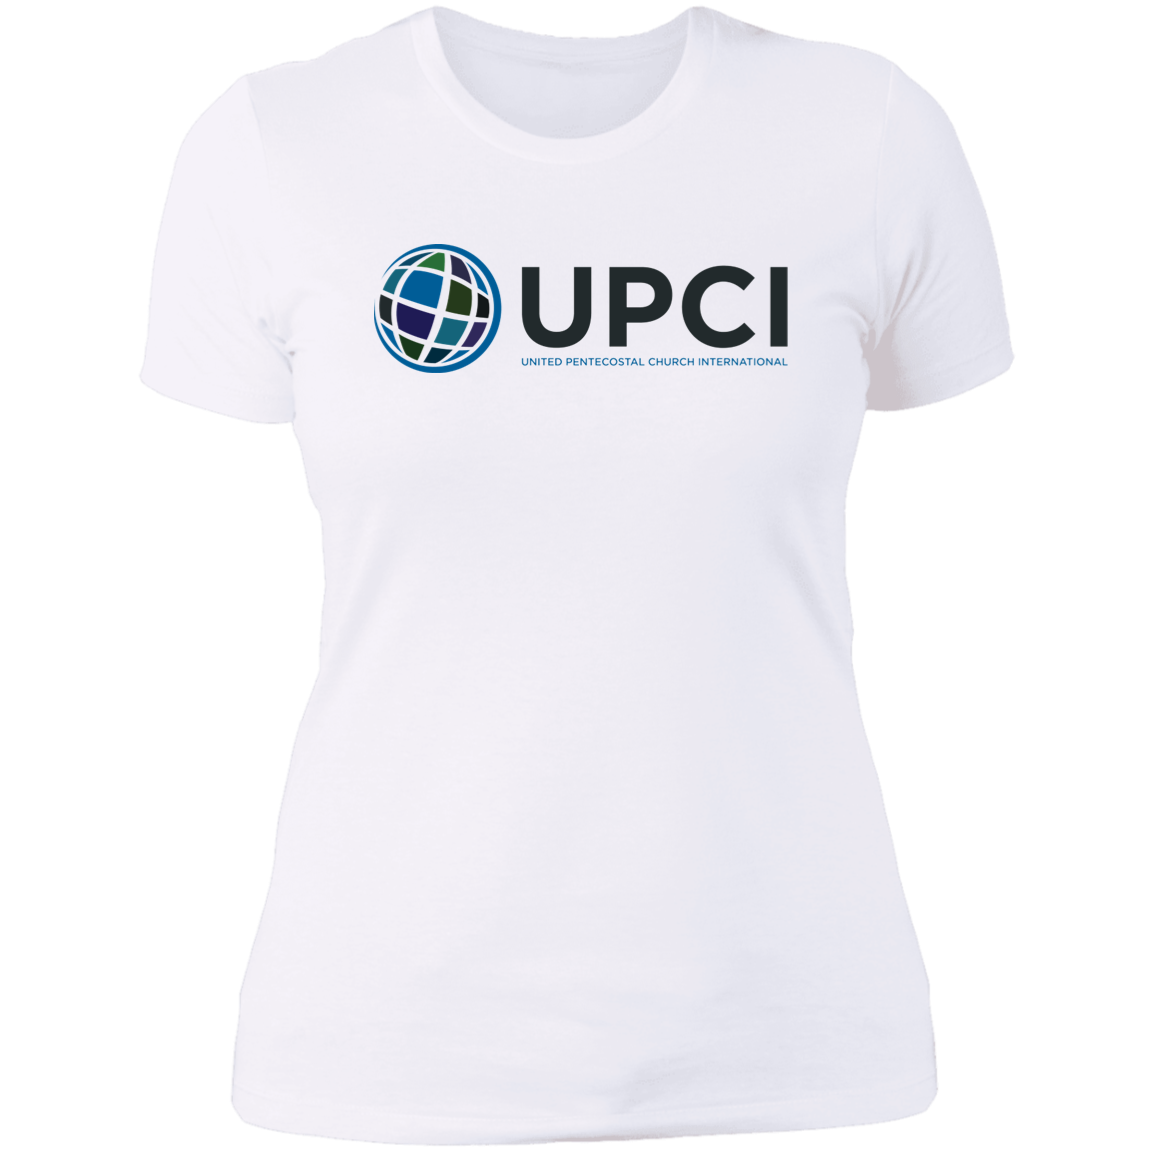 UPCI - Full Color Logo